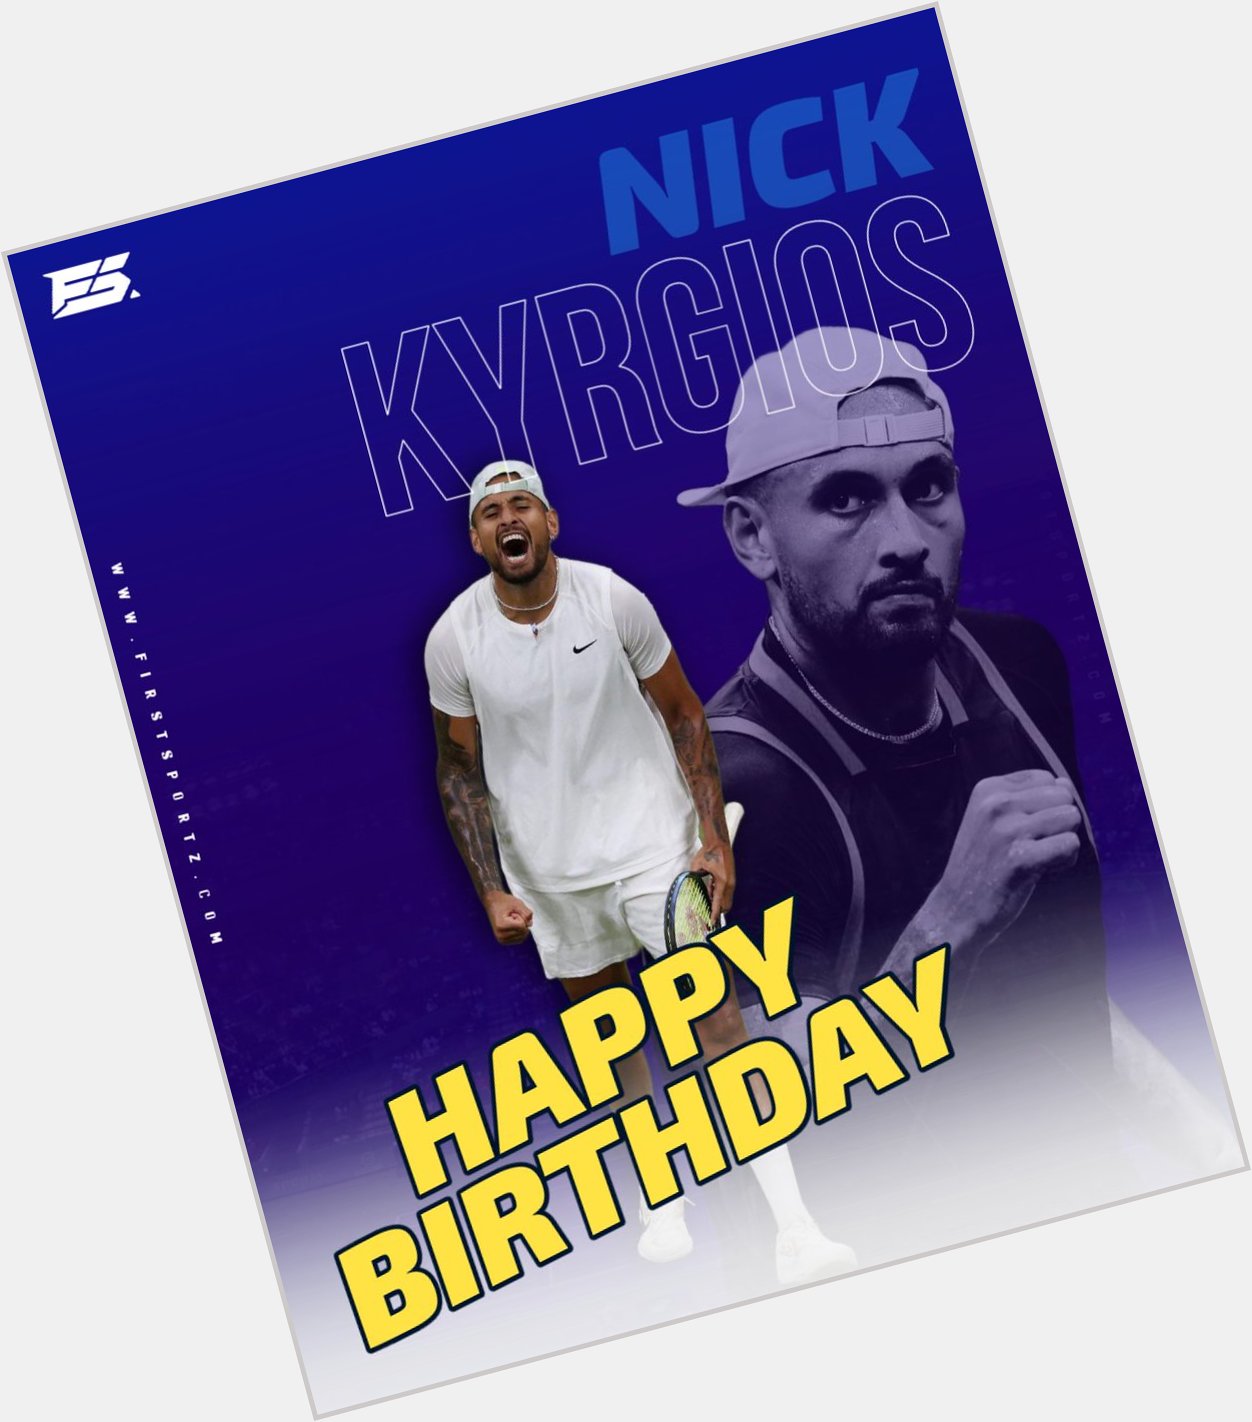 Happy 28th birthday to Nick Kyrgios 